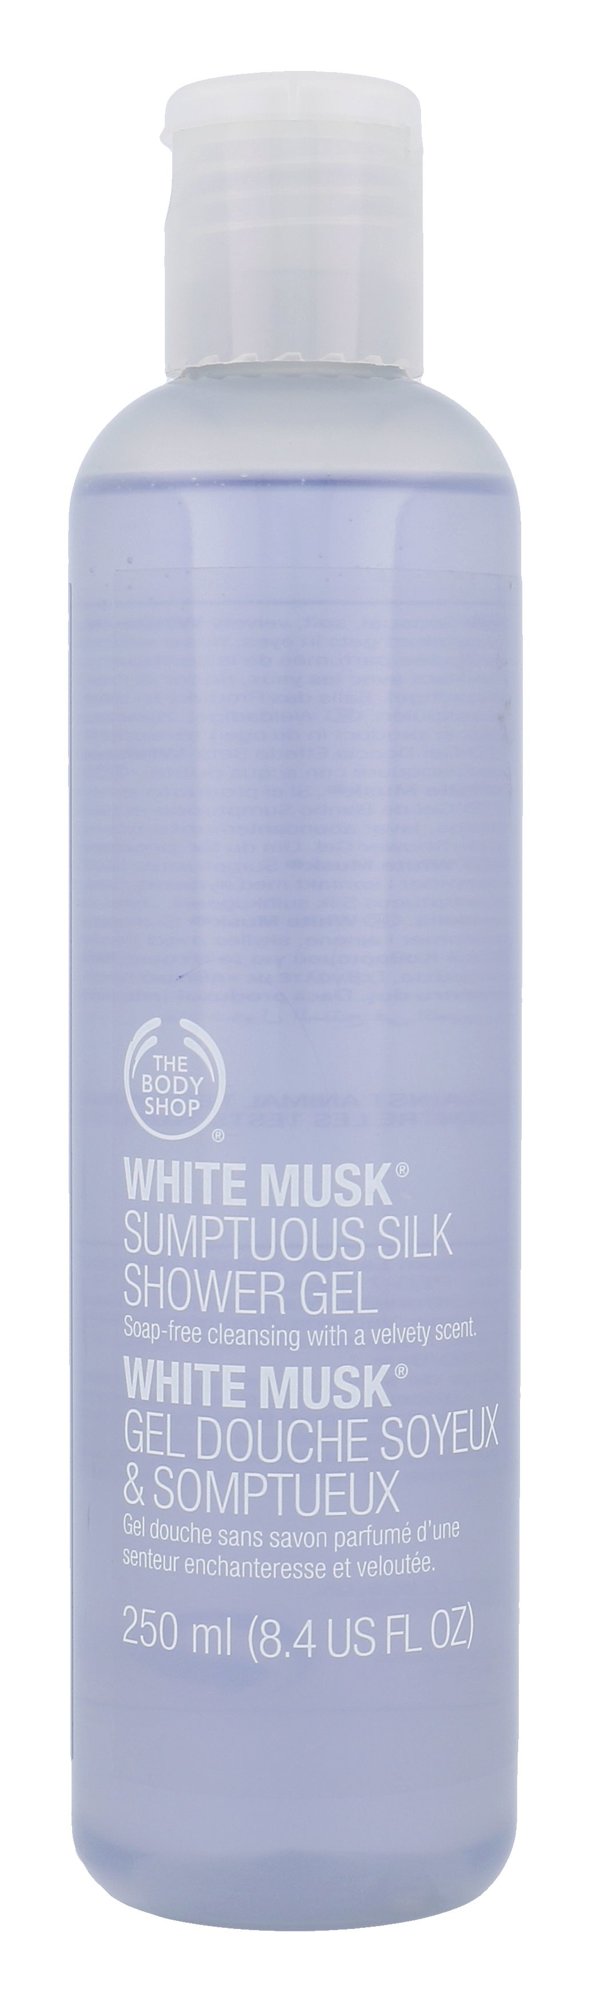 The Body Shop White Musk Shower Gel